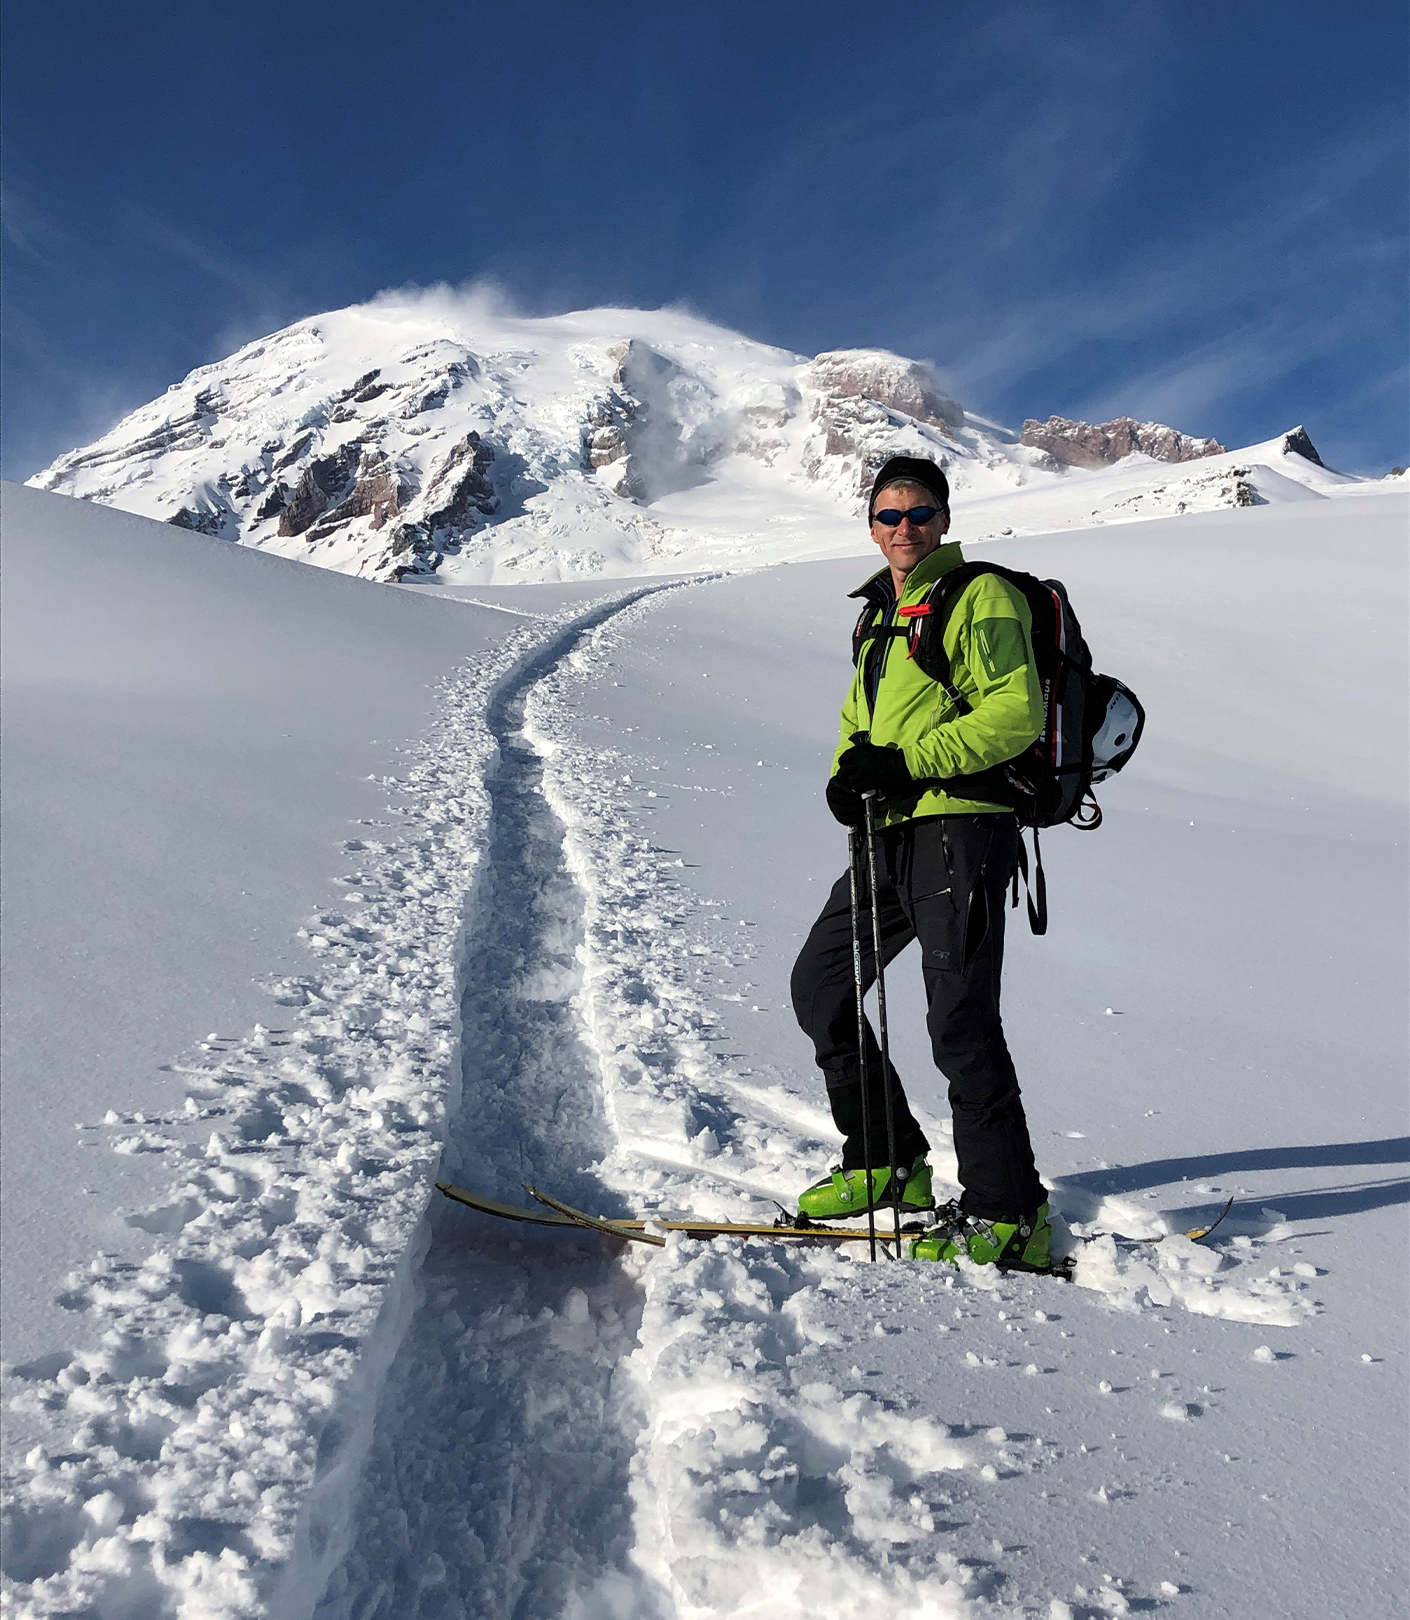 Ed climbing up Mount Rainier with skis